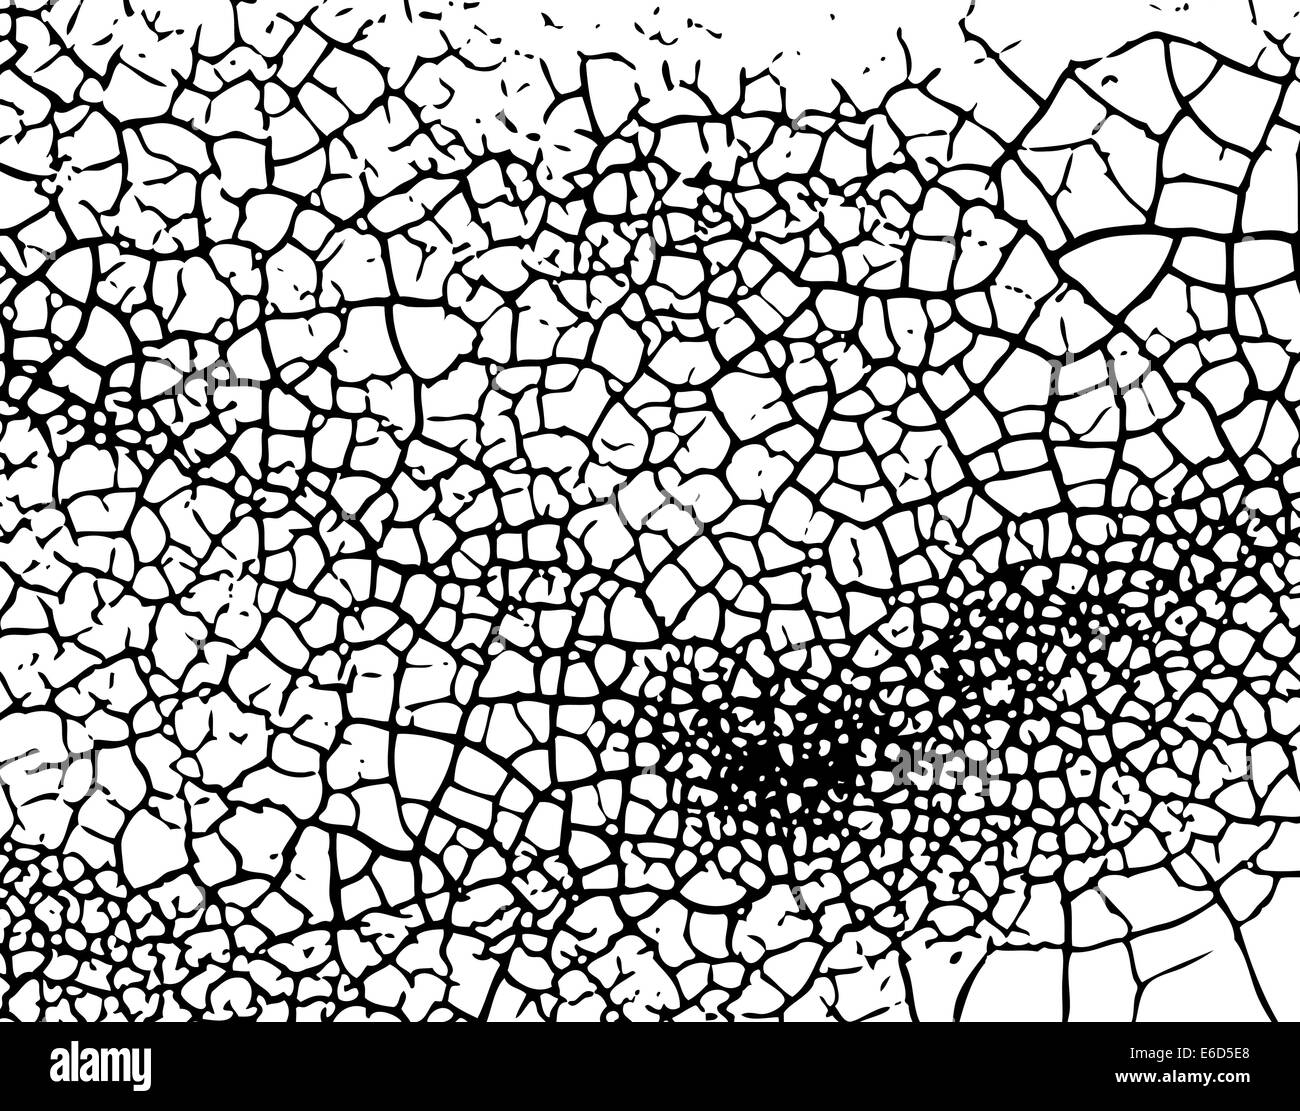 Background editable vector, illustration of cracked grunge pattern Stock Vector